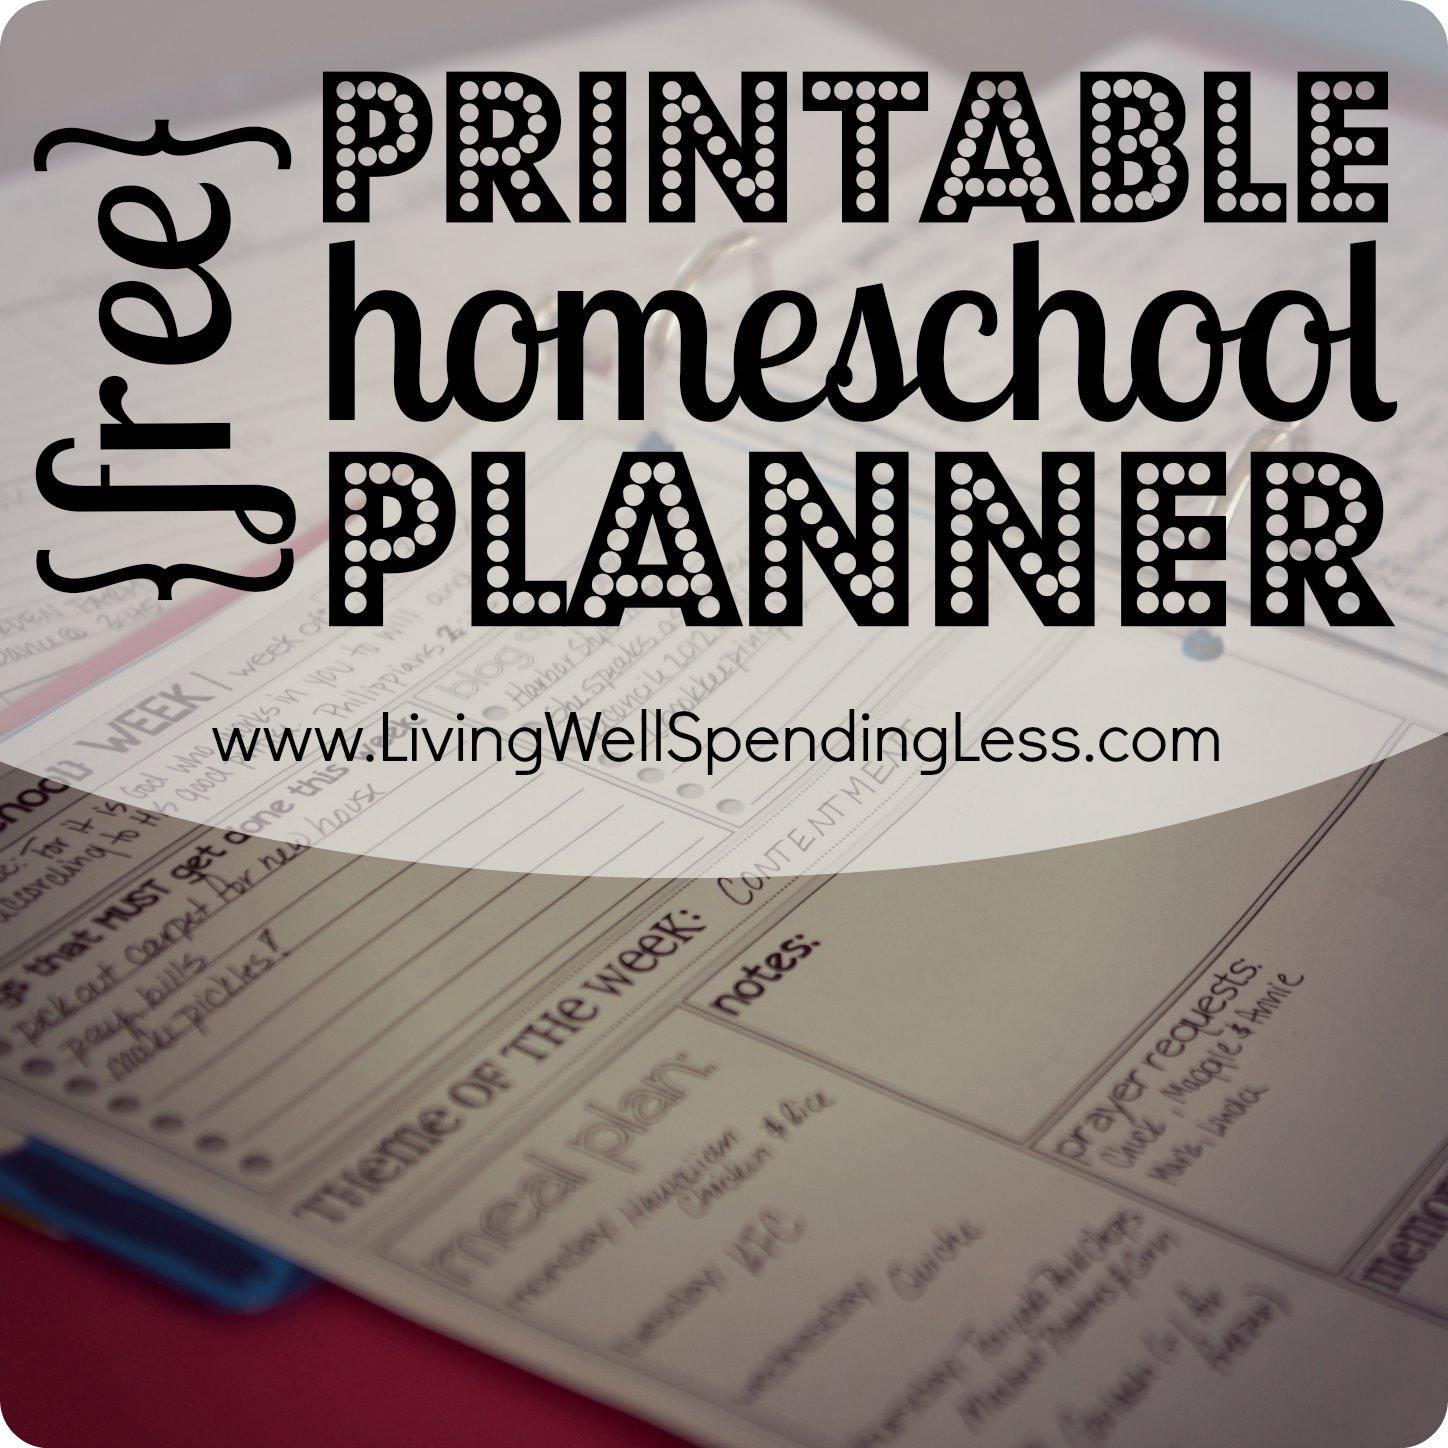 Homeschool Planner Free Printables Free Planner Download